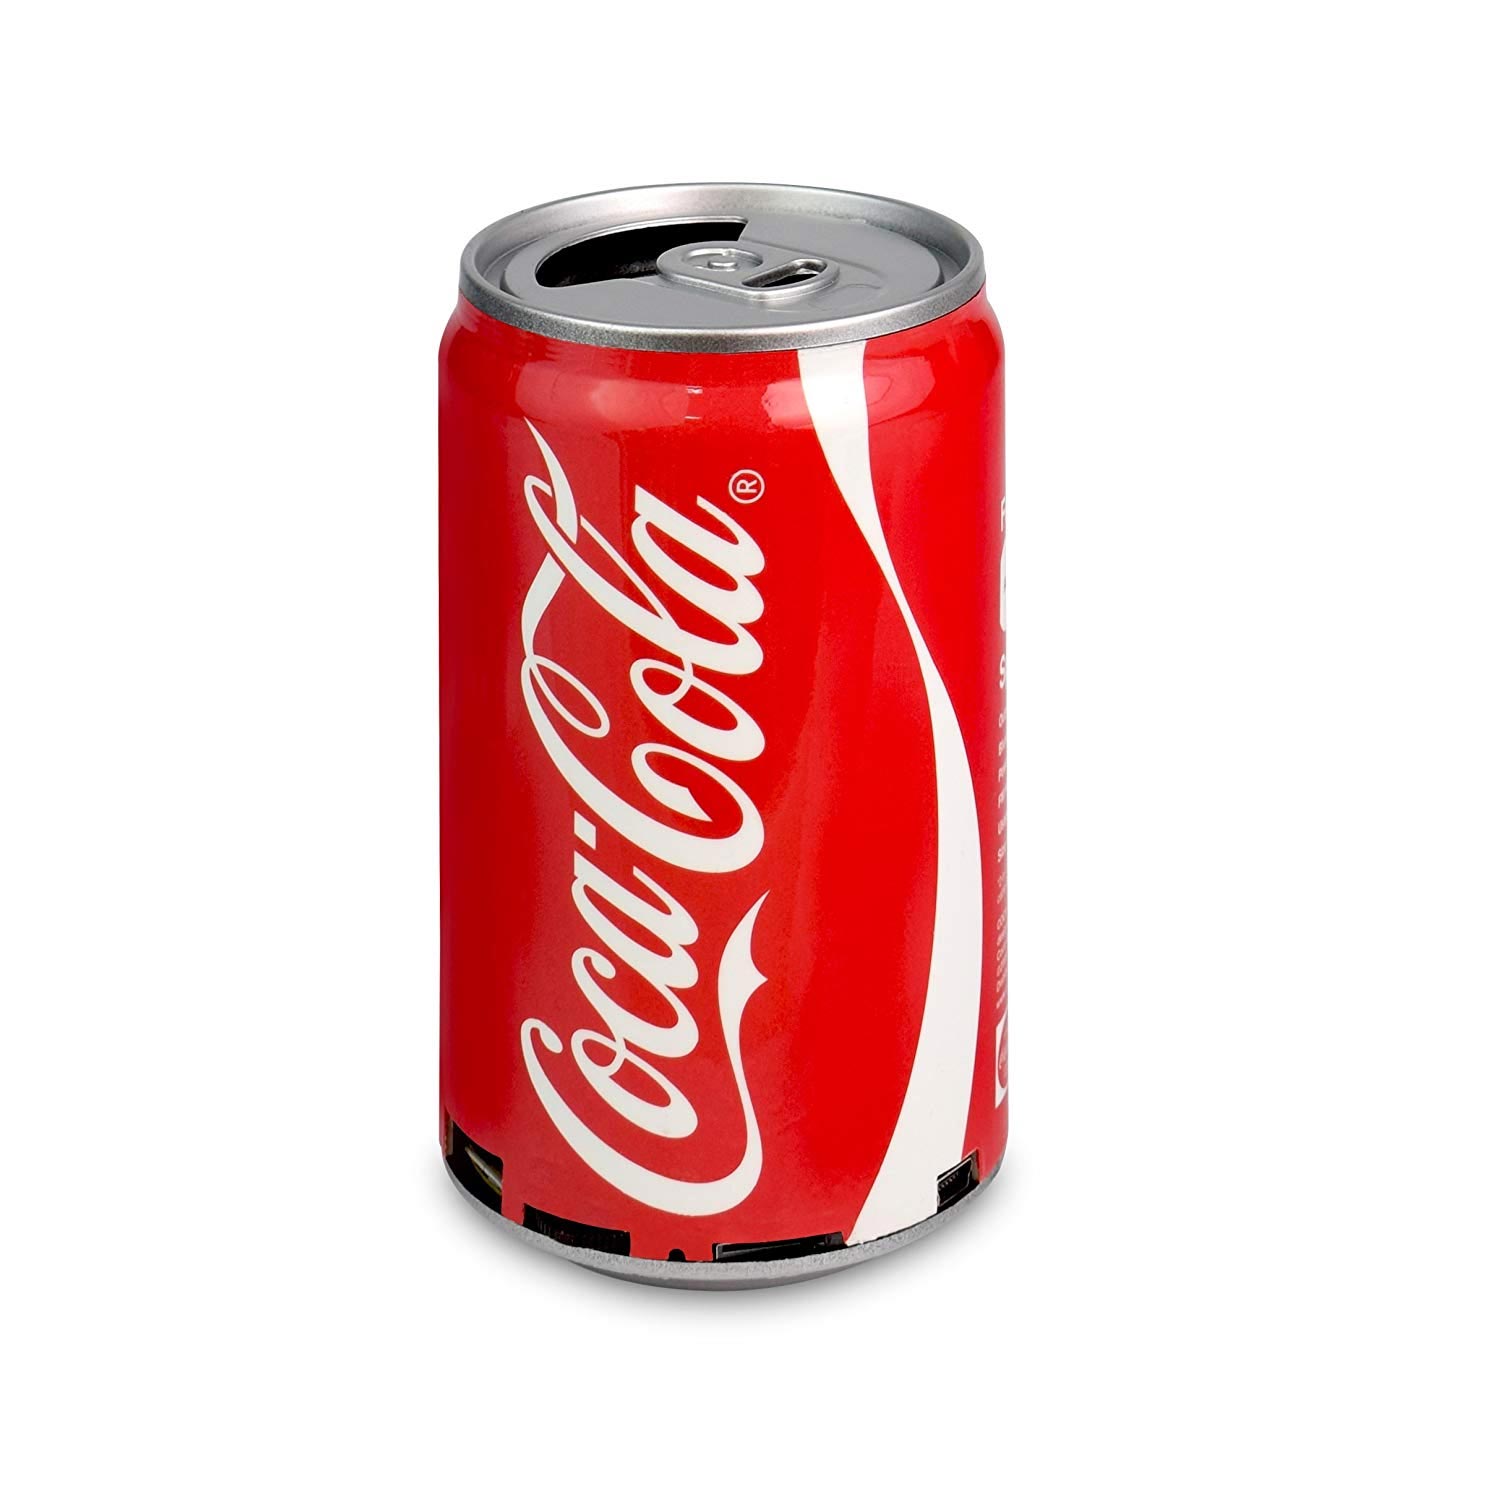 Coca Cola BT Can Speaker with FM Radio